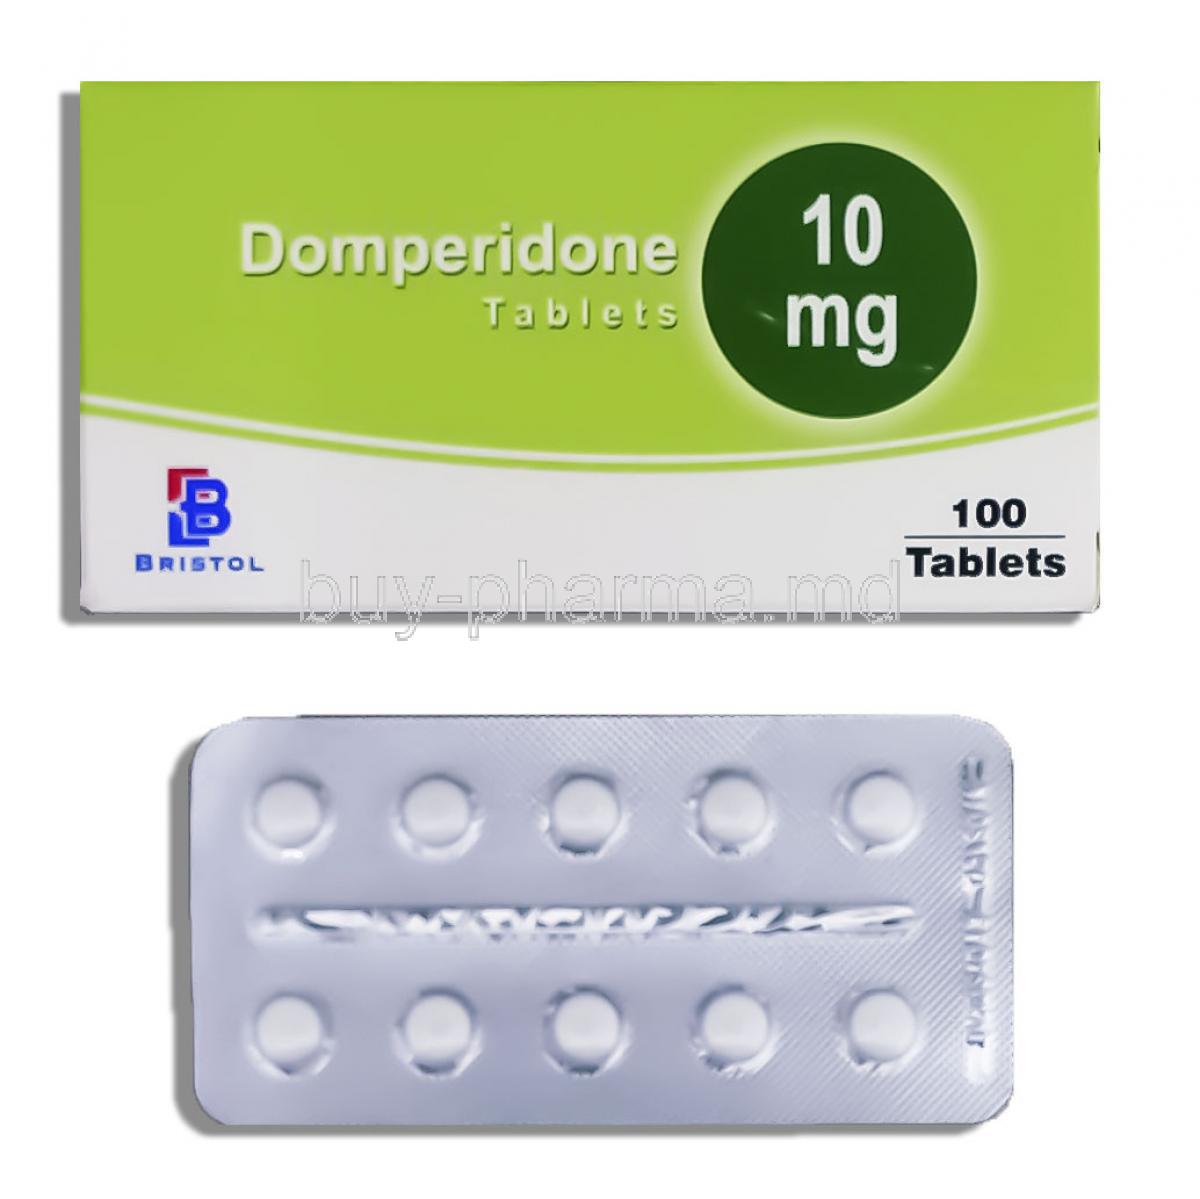 Domperidone 10 mg